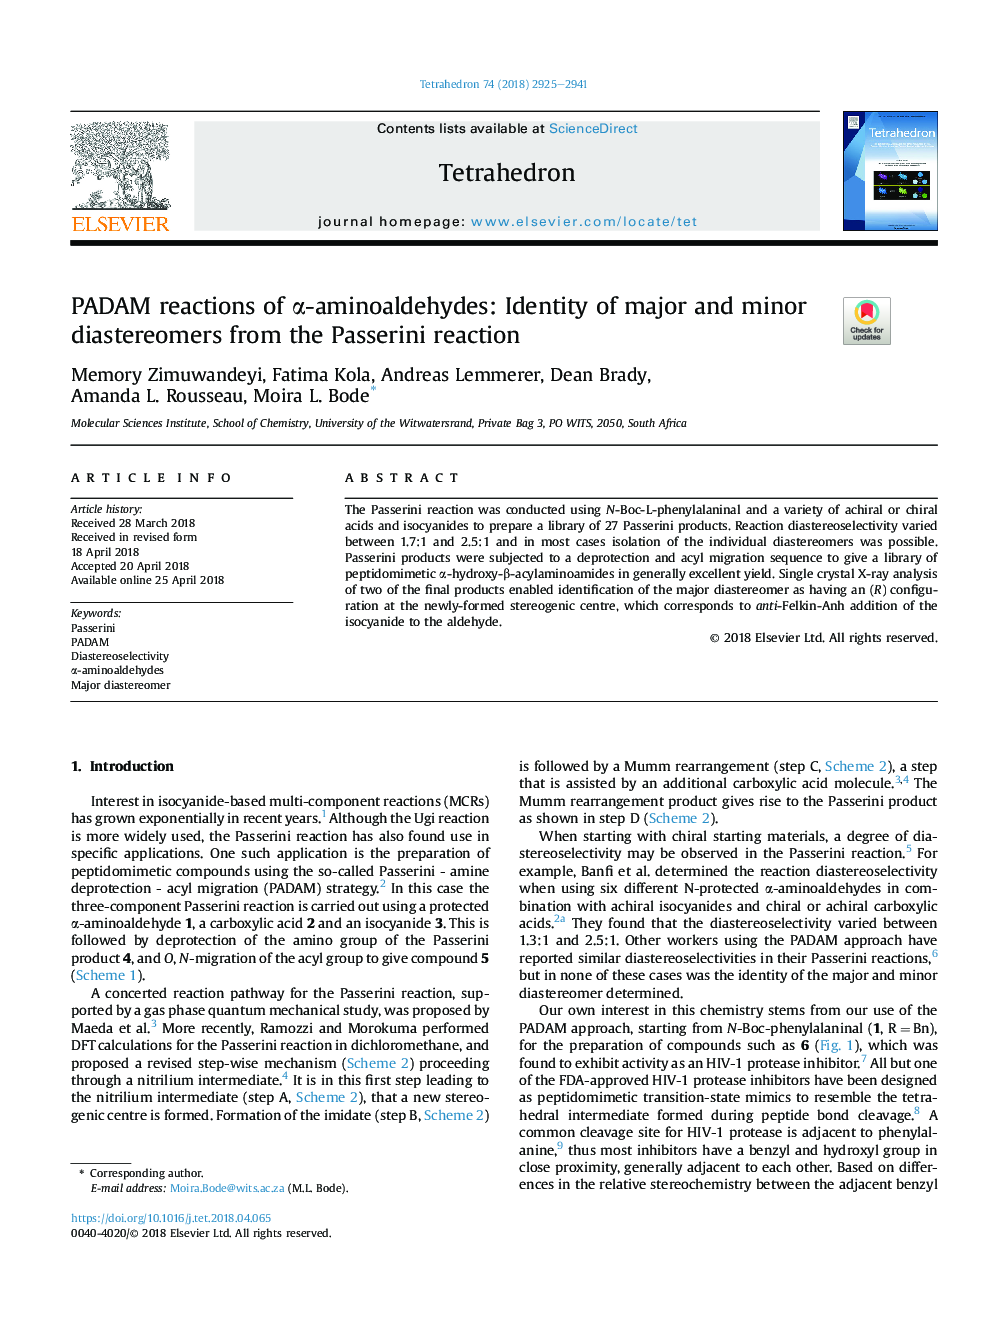 PADAM reactions of Î±-aminoaldehydes: Identity of major and minor diastereomers from the Passerini reaction